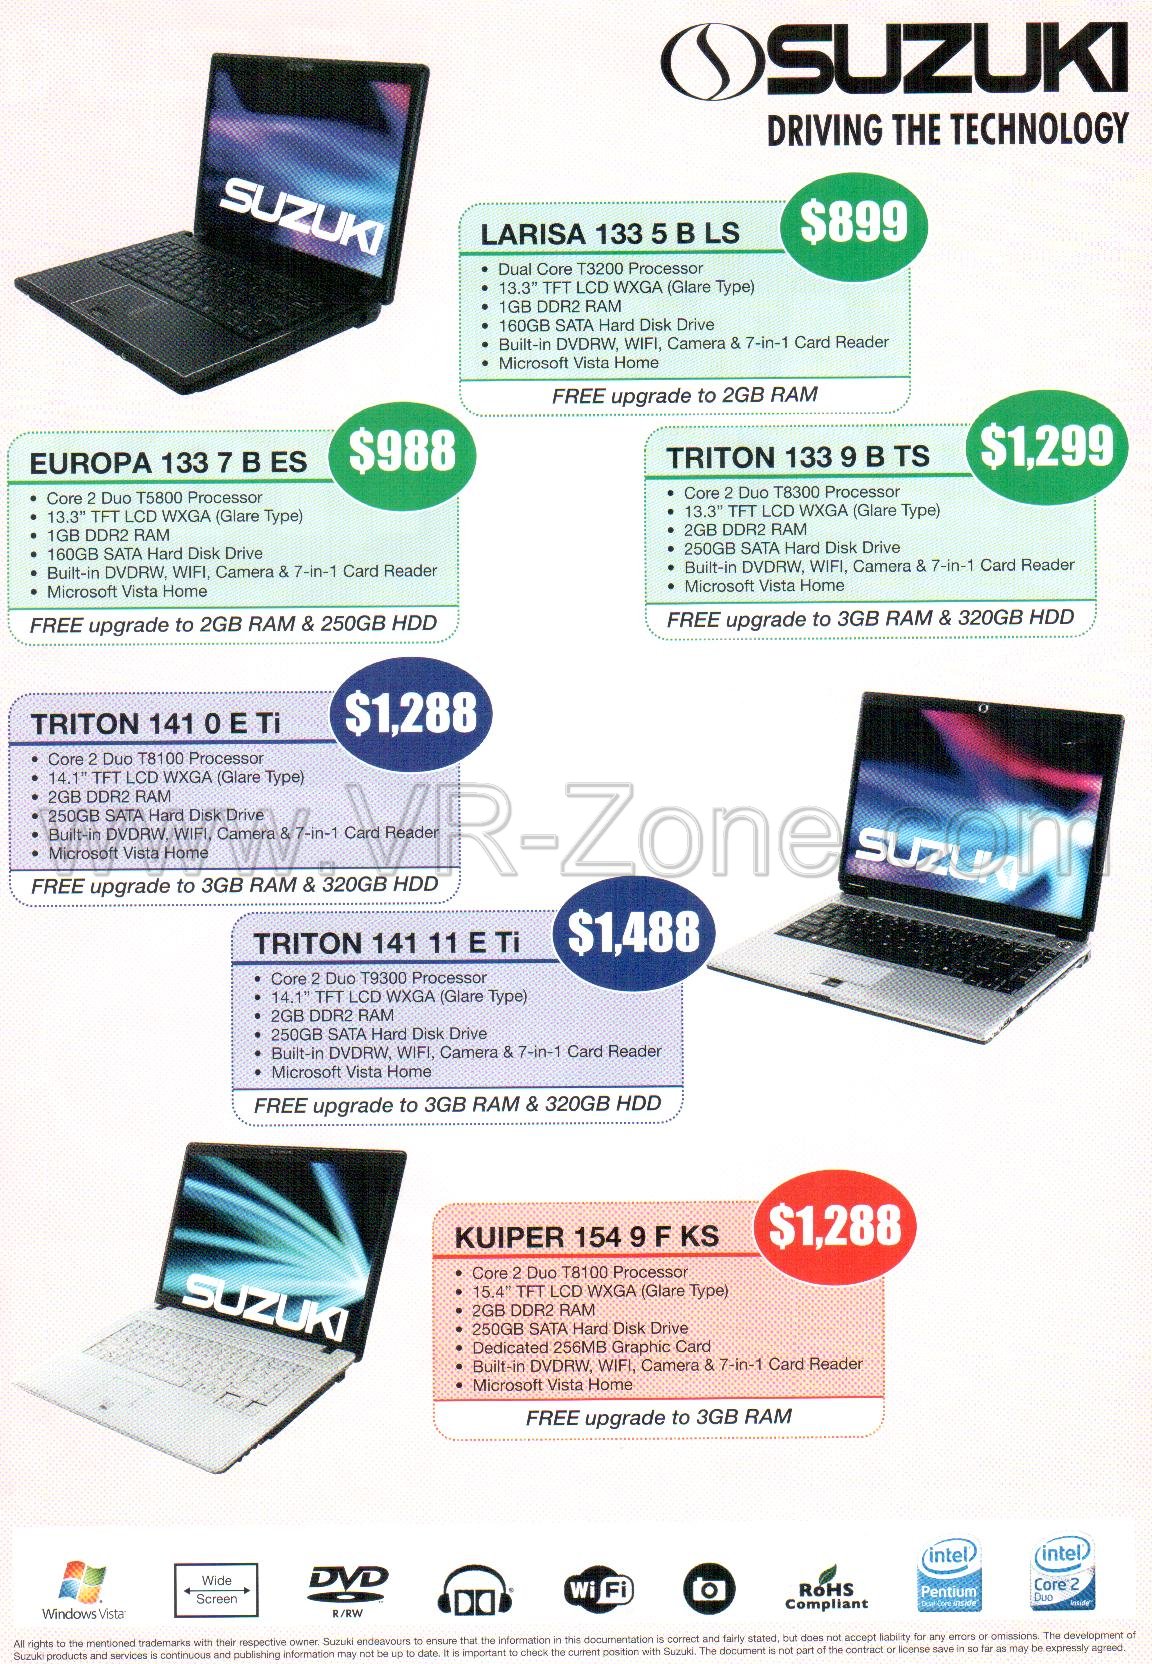 Sitex 2008 price list image brochure of Suzuki Notebooks 